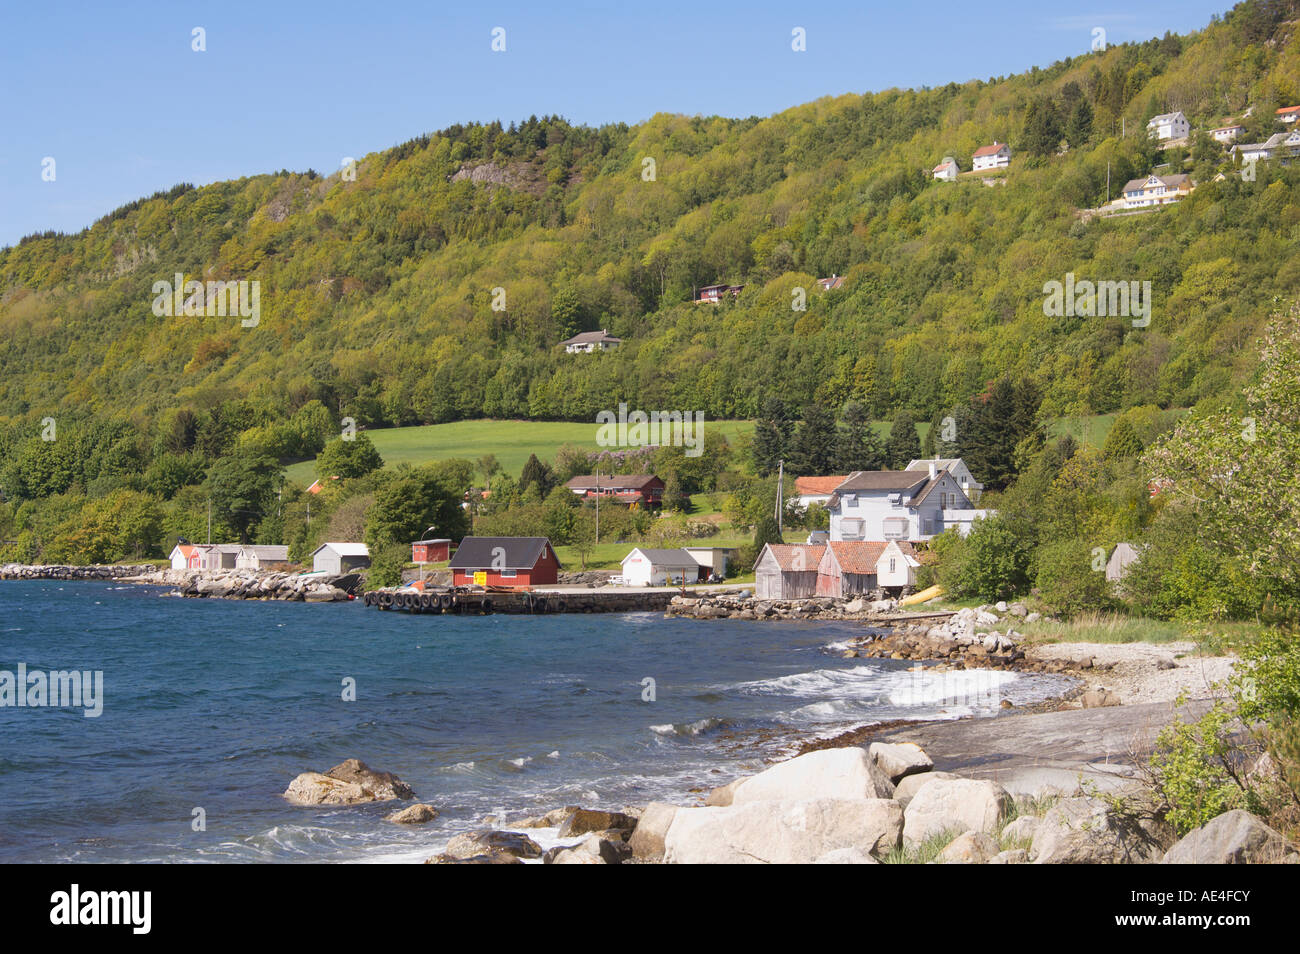 Fjord side scenery near Tau Stavanger Norway Stock Photo - Alamy